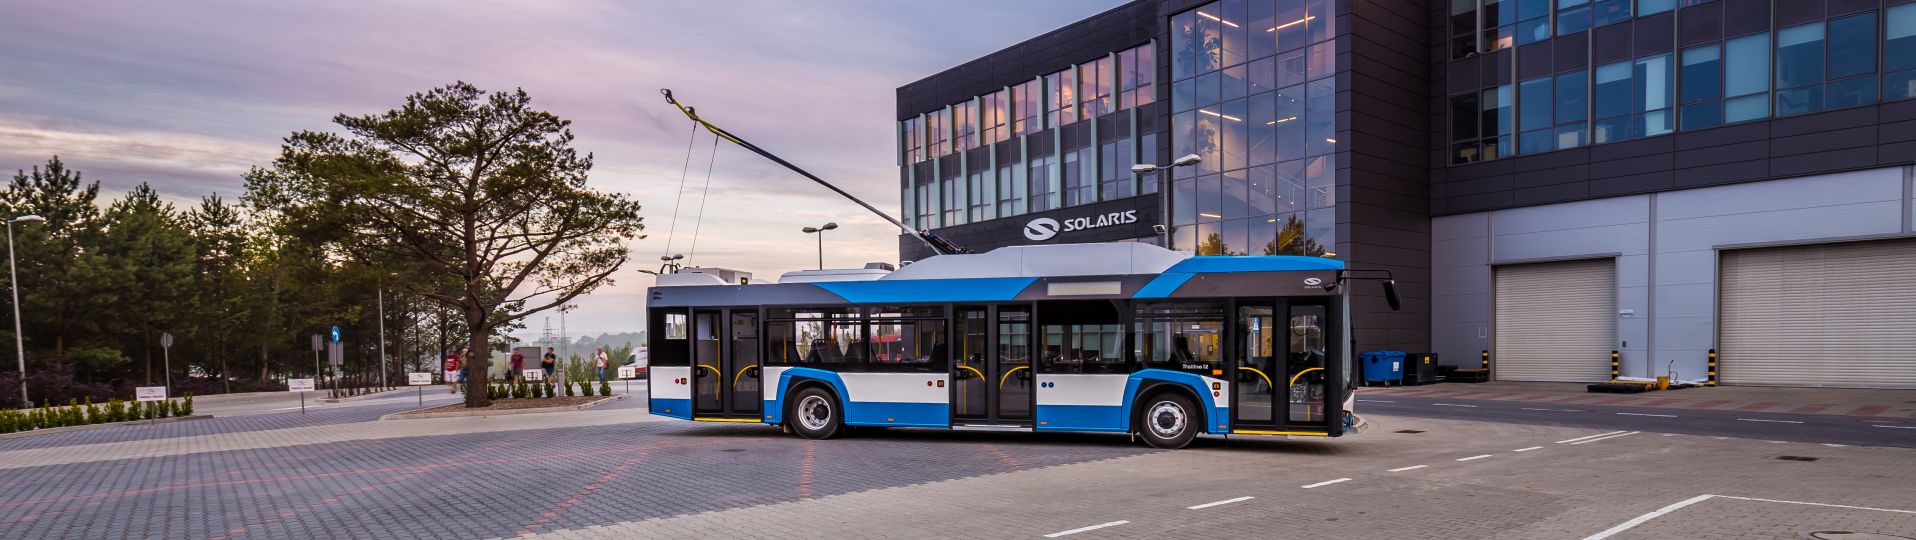 Solaris’ Trolleybus Expansion in Europe